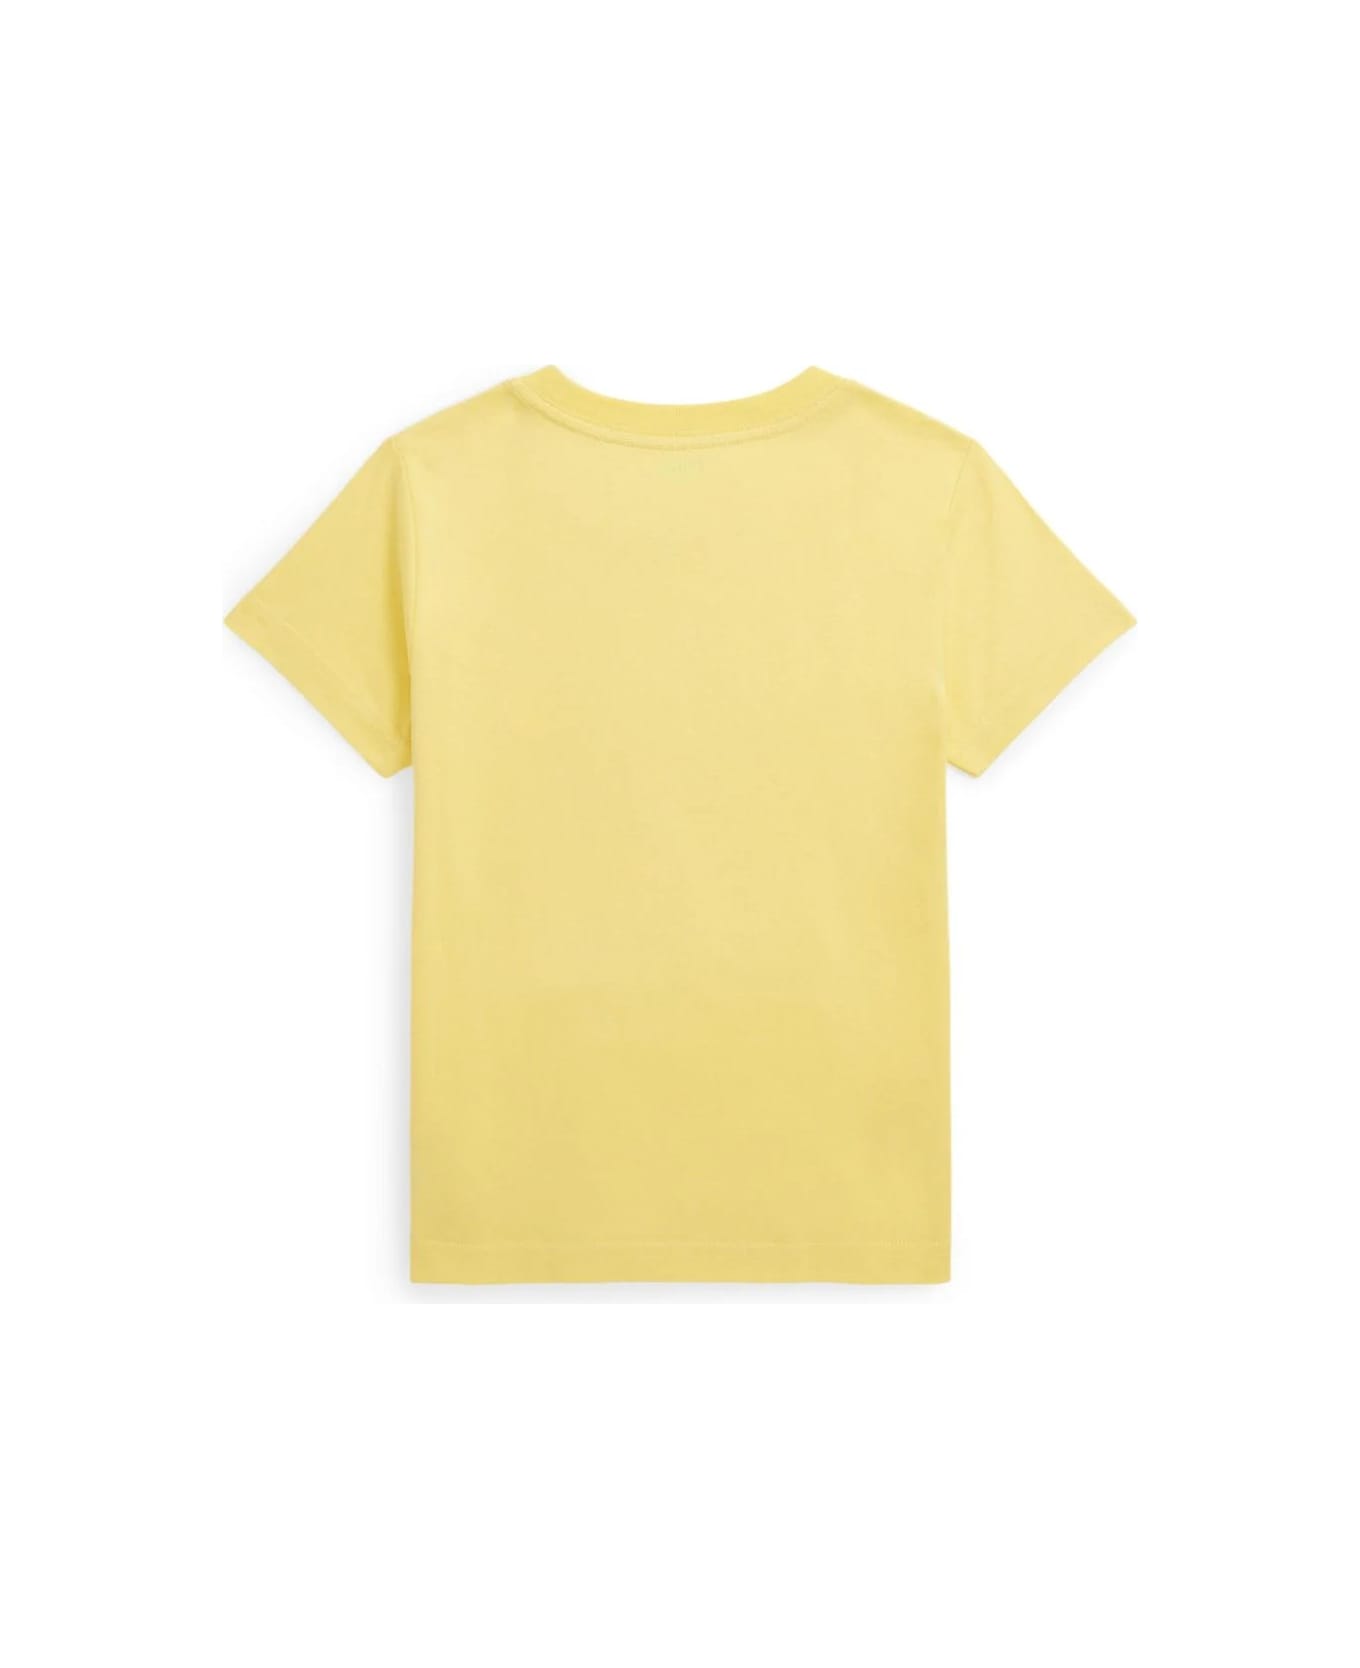 Ralph Lauren Yellow T-shirt With Blue Pony - Yellow